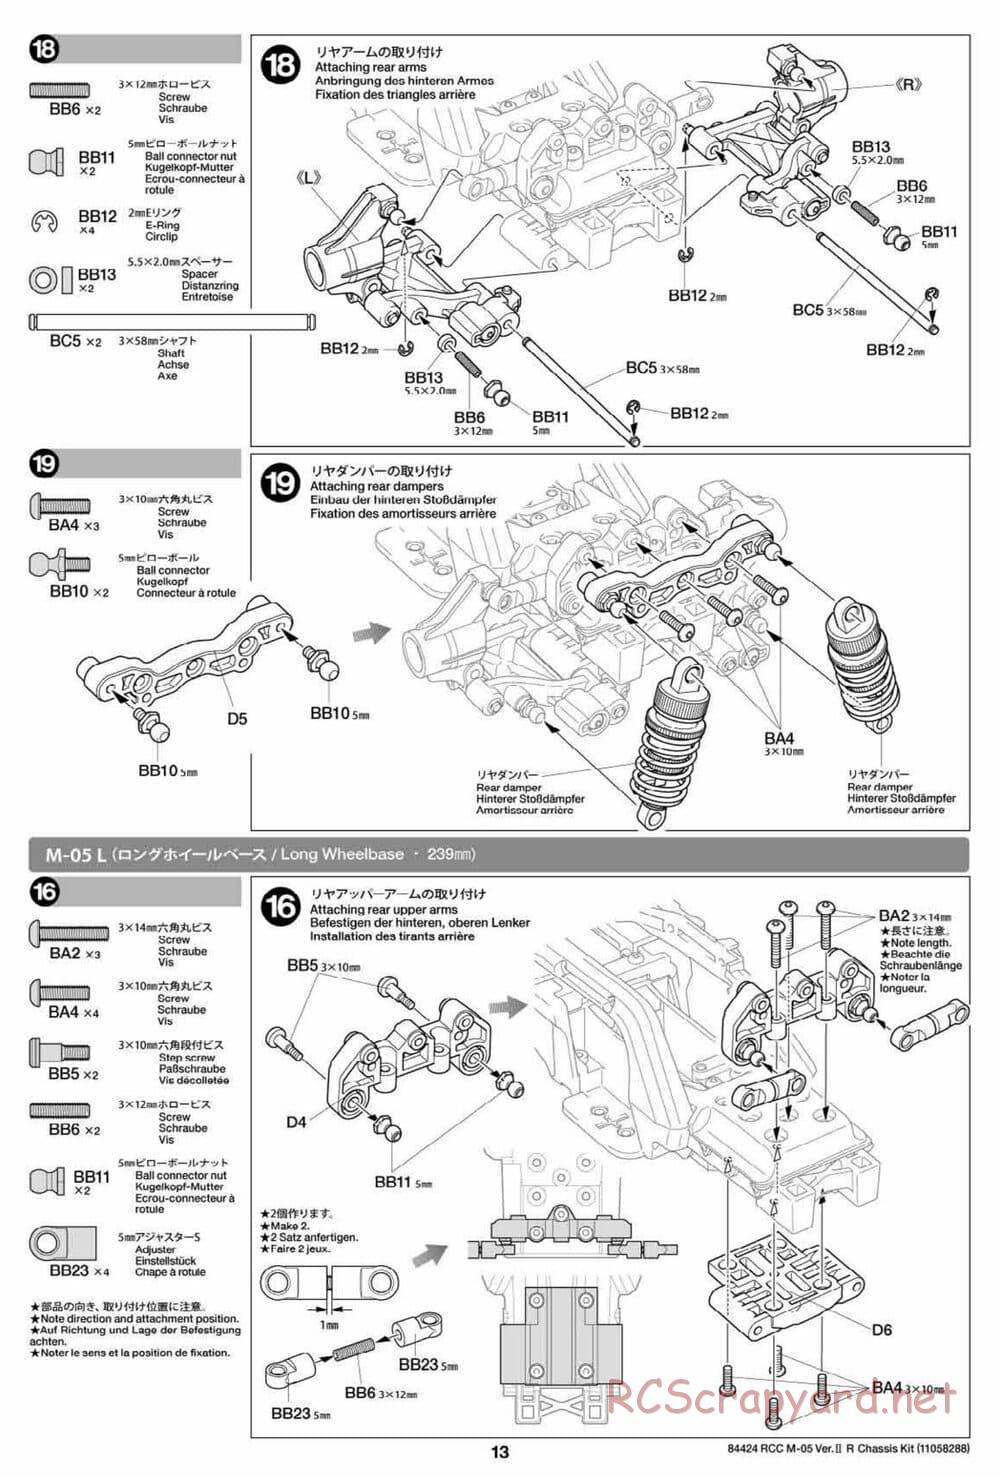 Tamiya - M-05 Ver.II R Chassis Chassis - Manual - Page 13